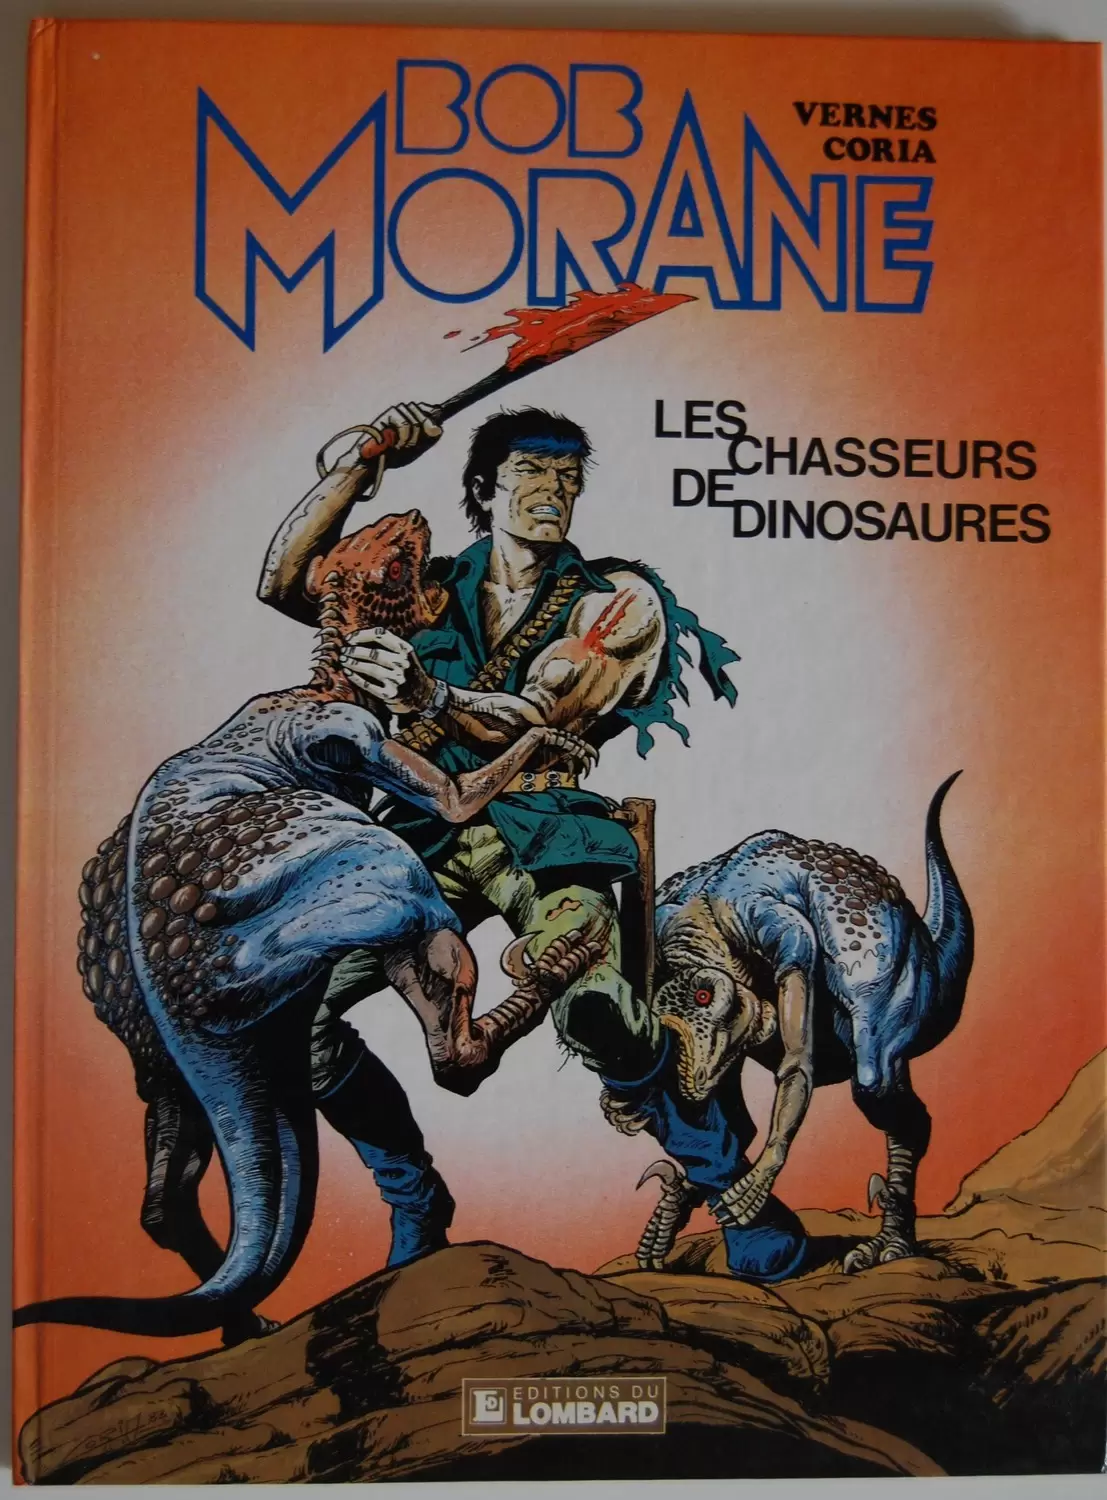 Bob Morane - Les chasseurs de dinosaures